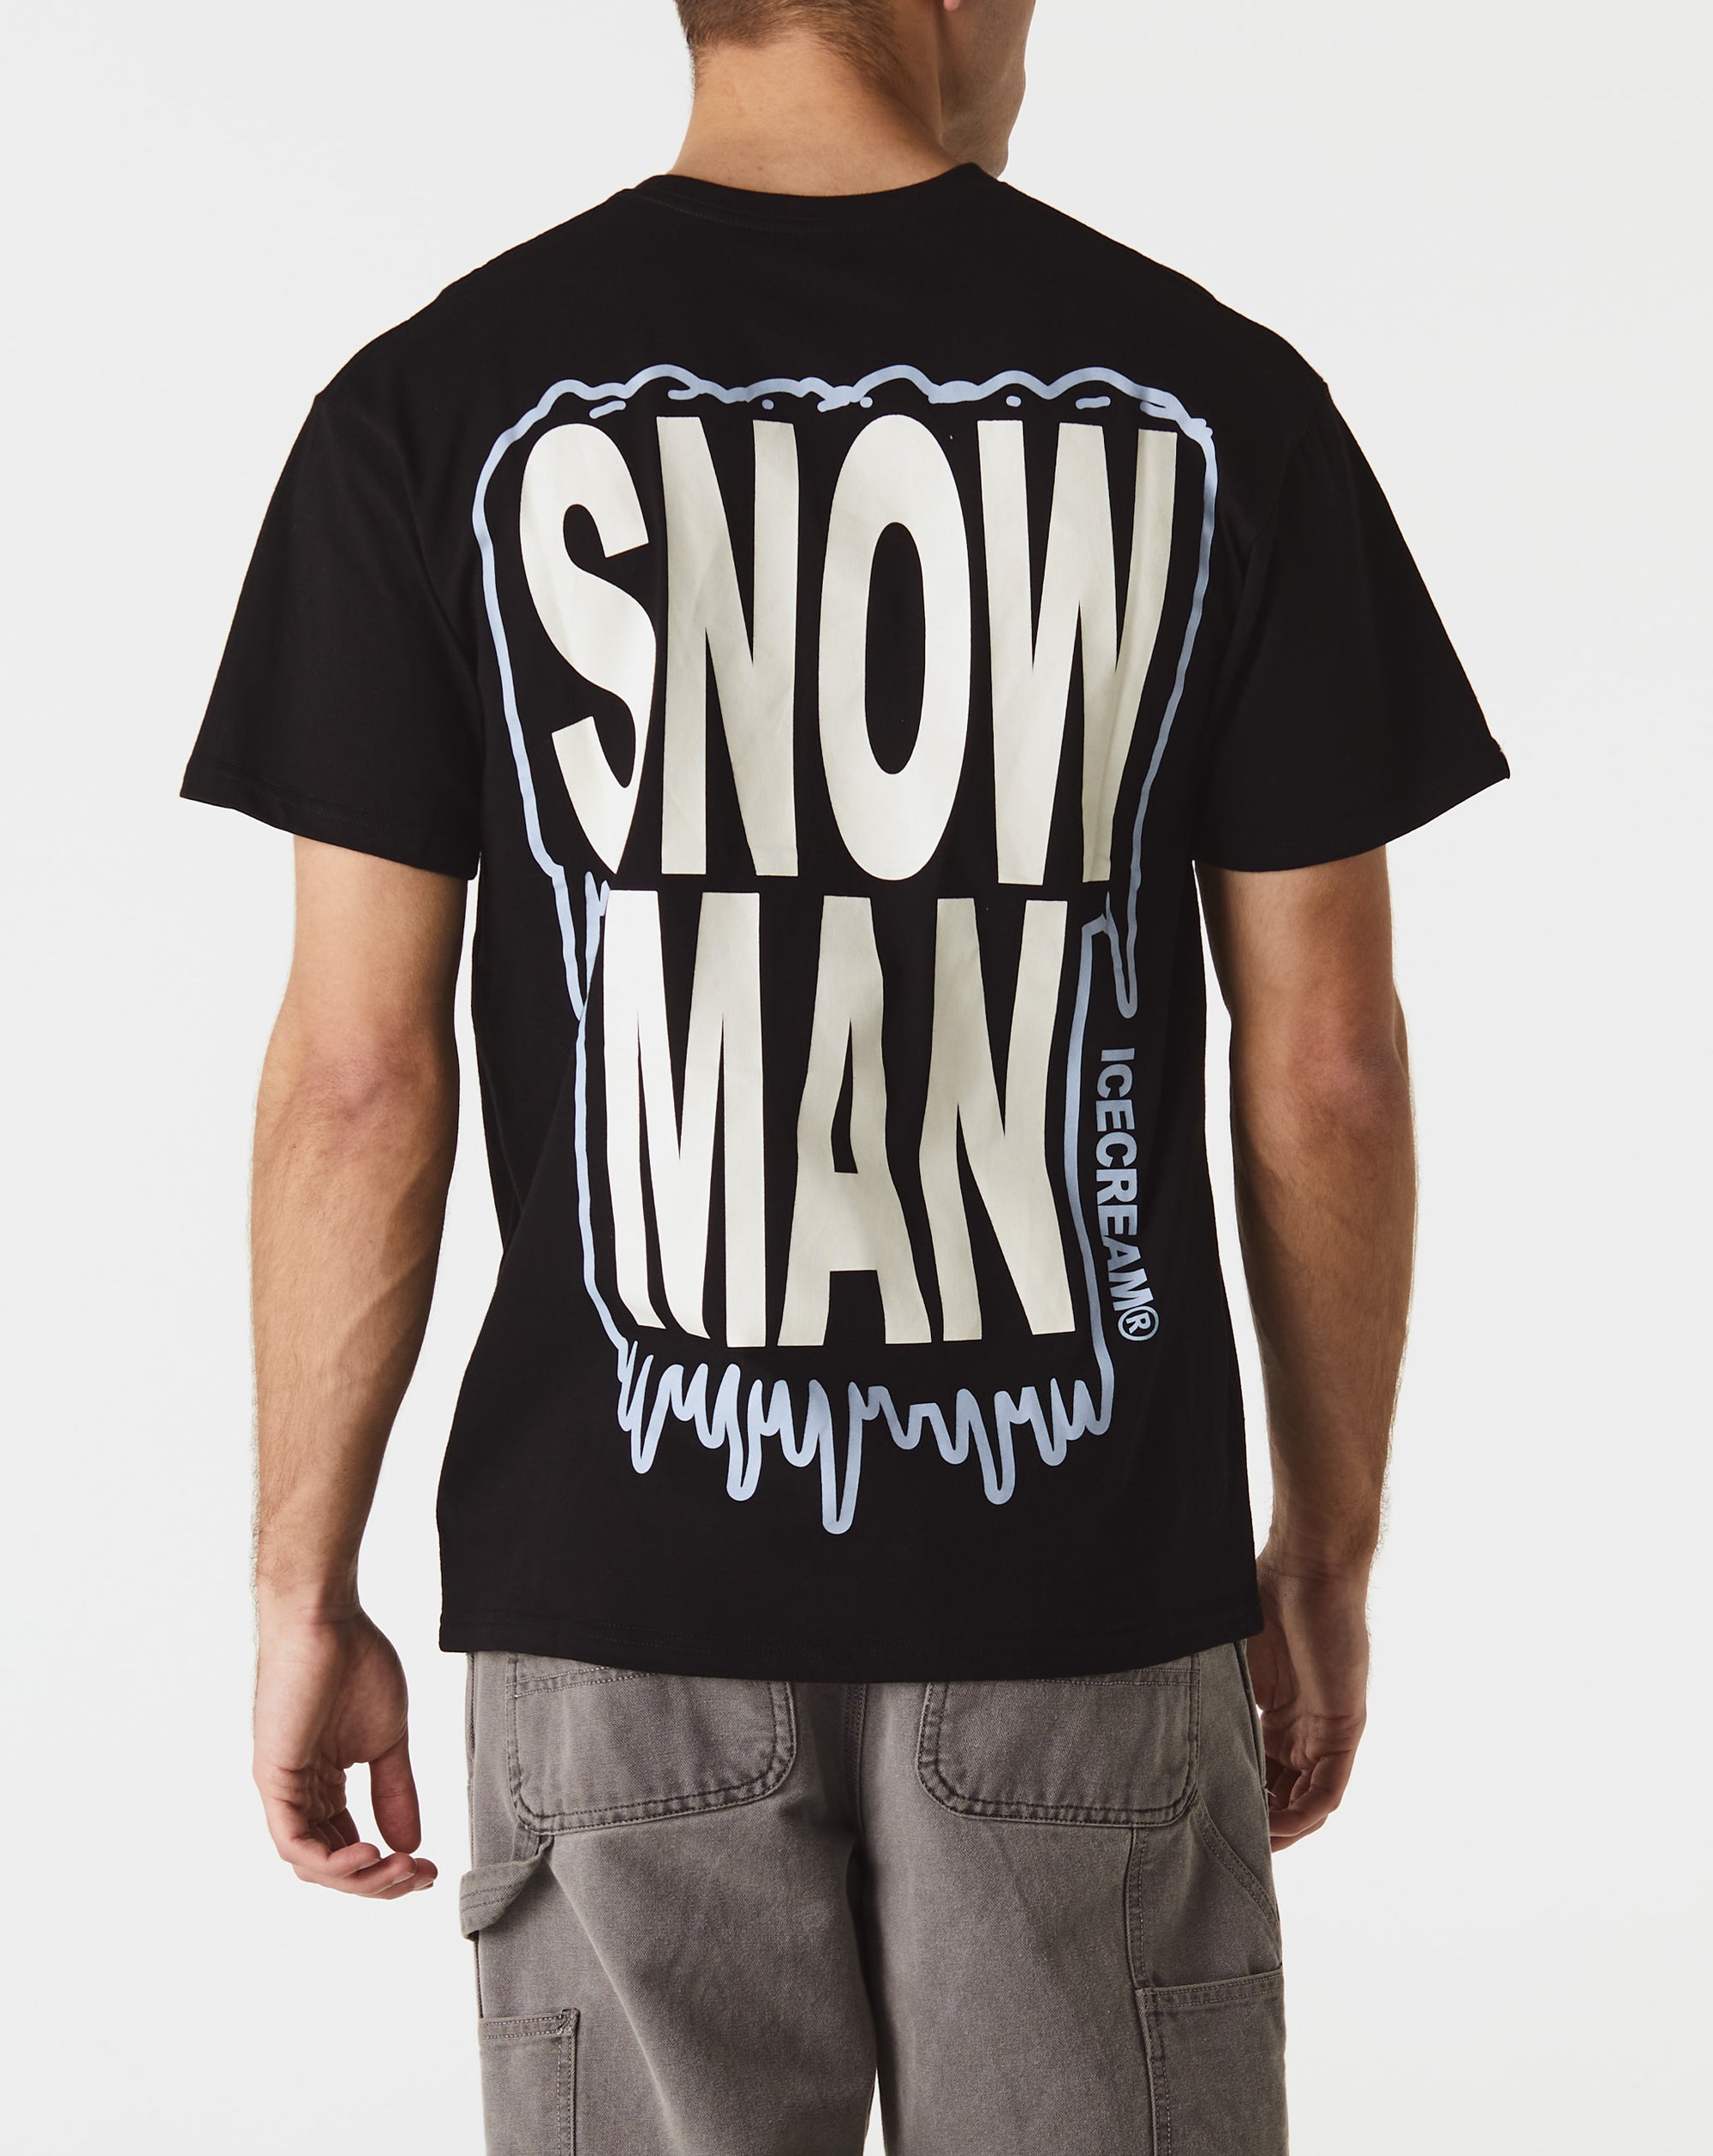 IceCream Snow Business Millie T-Shirt - Rule of Next Apparel